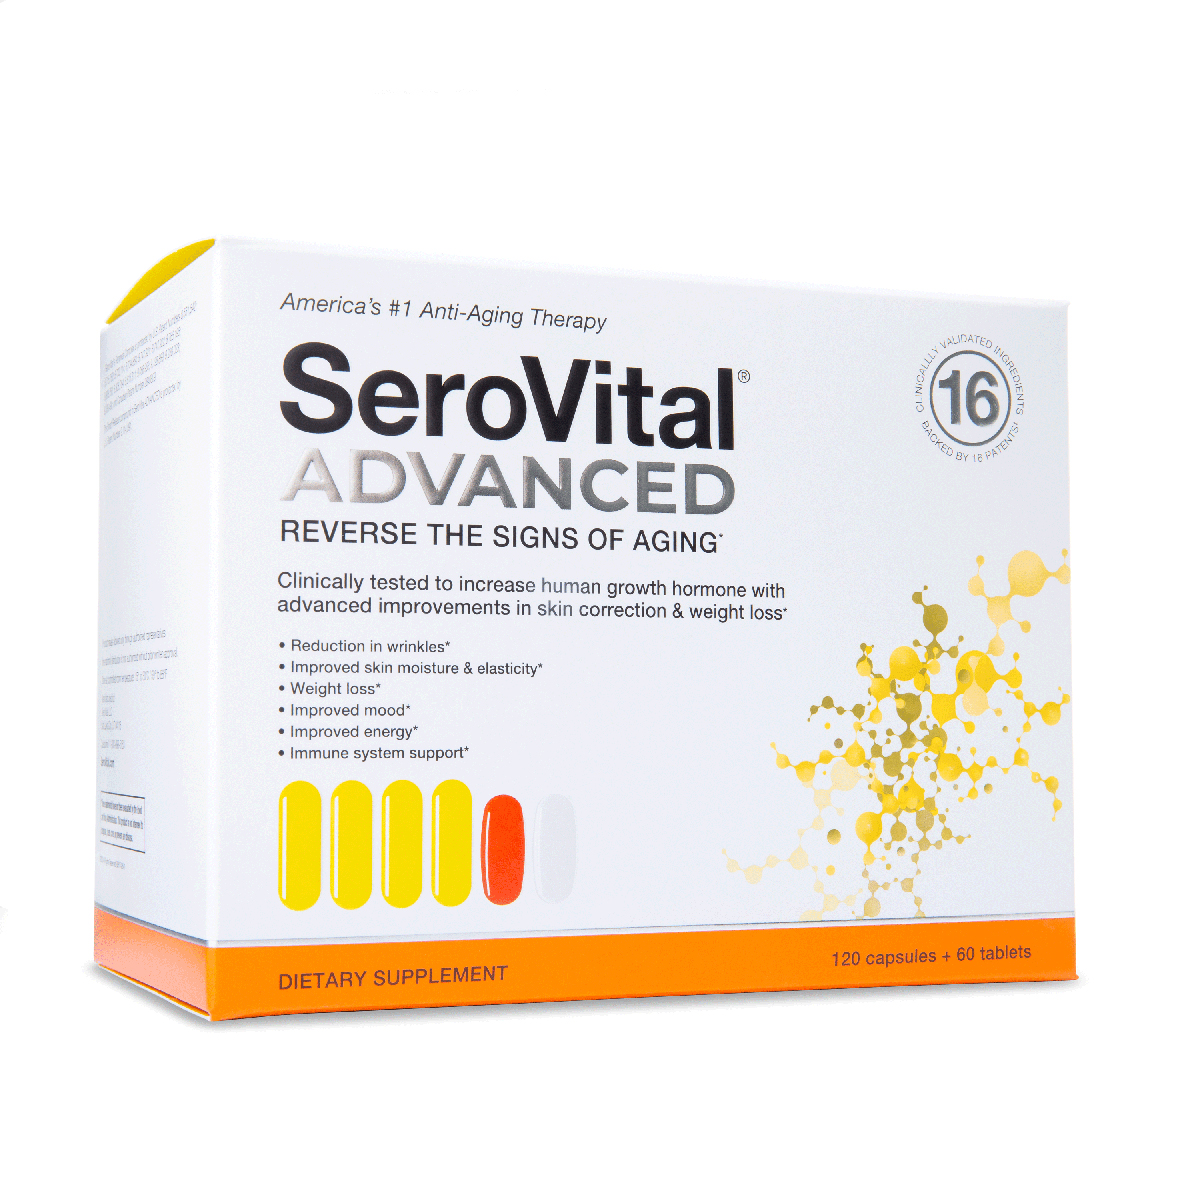 SeroVital(R) Advanced